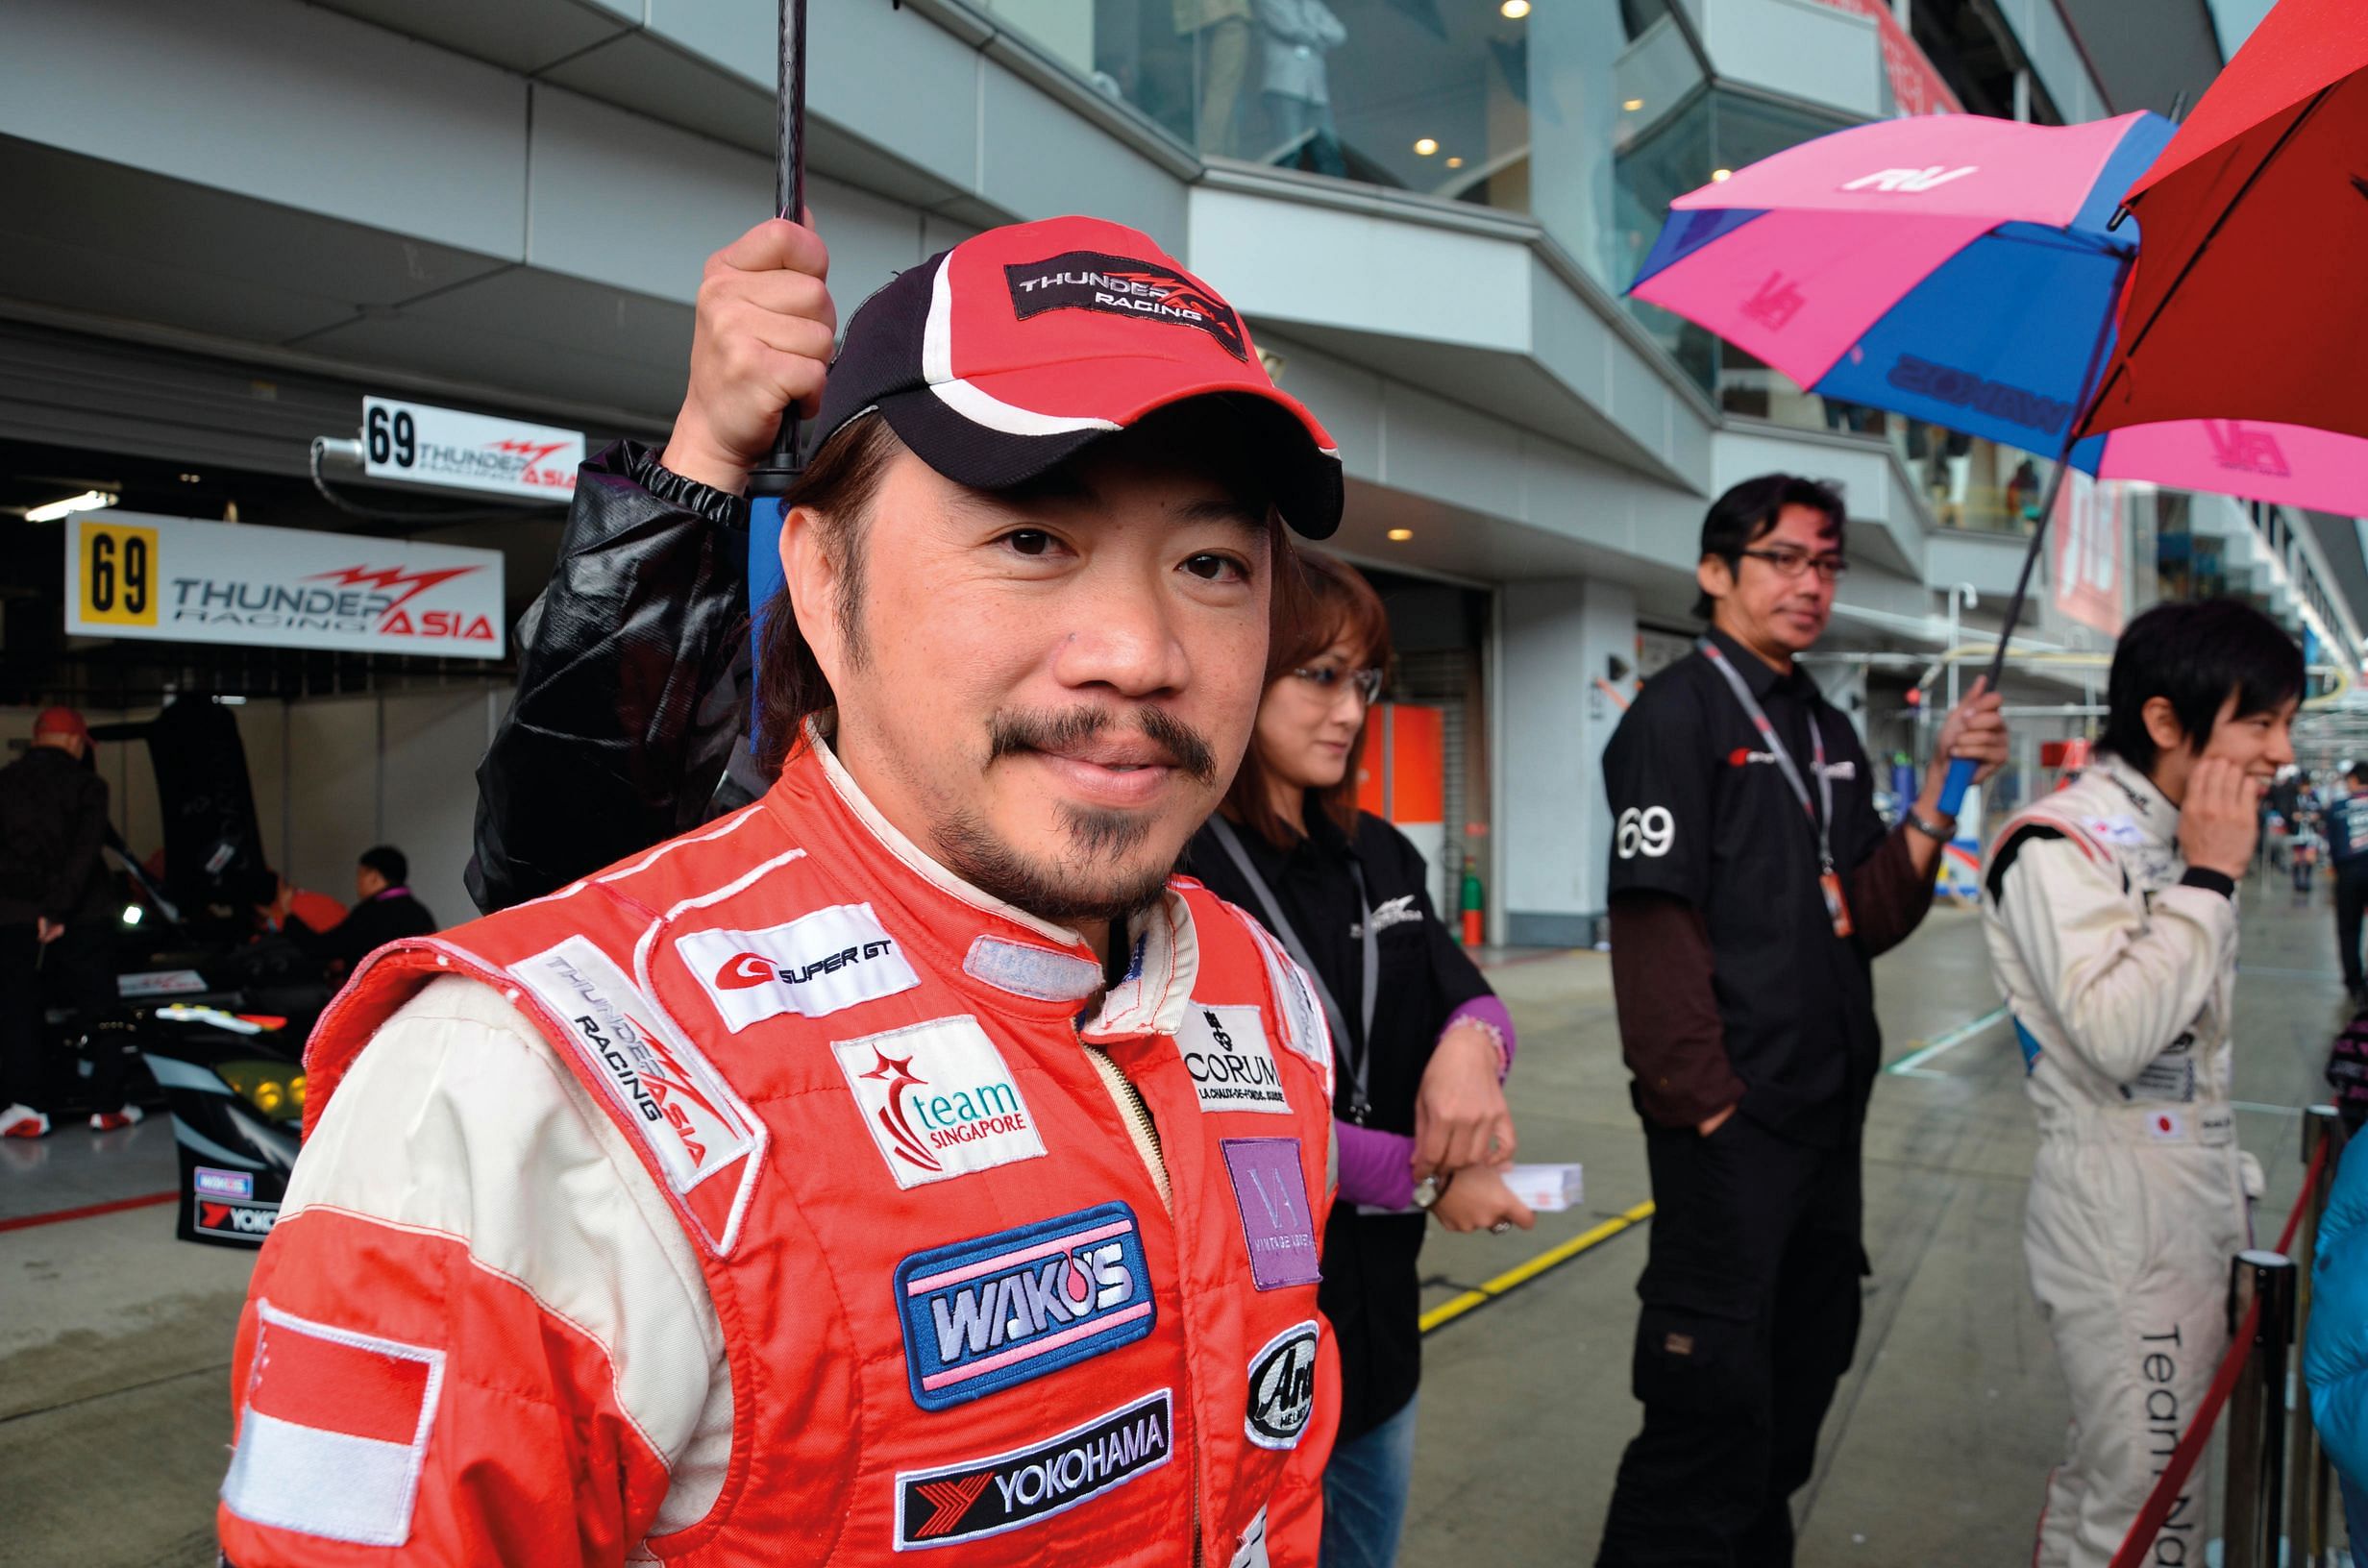 Melvin Choo challenging racetracks motoring